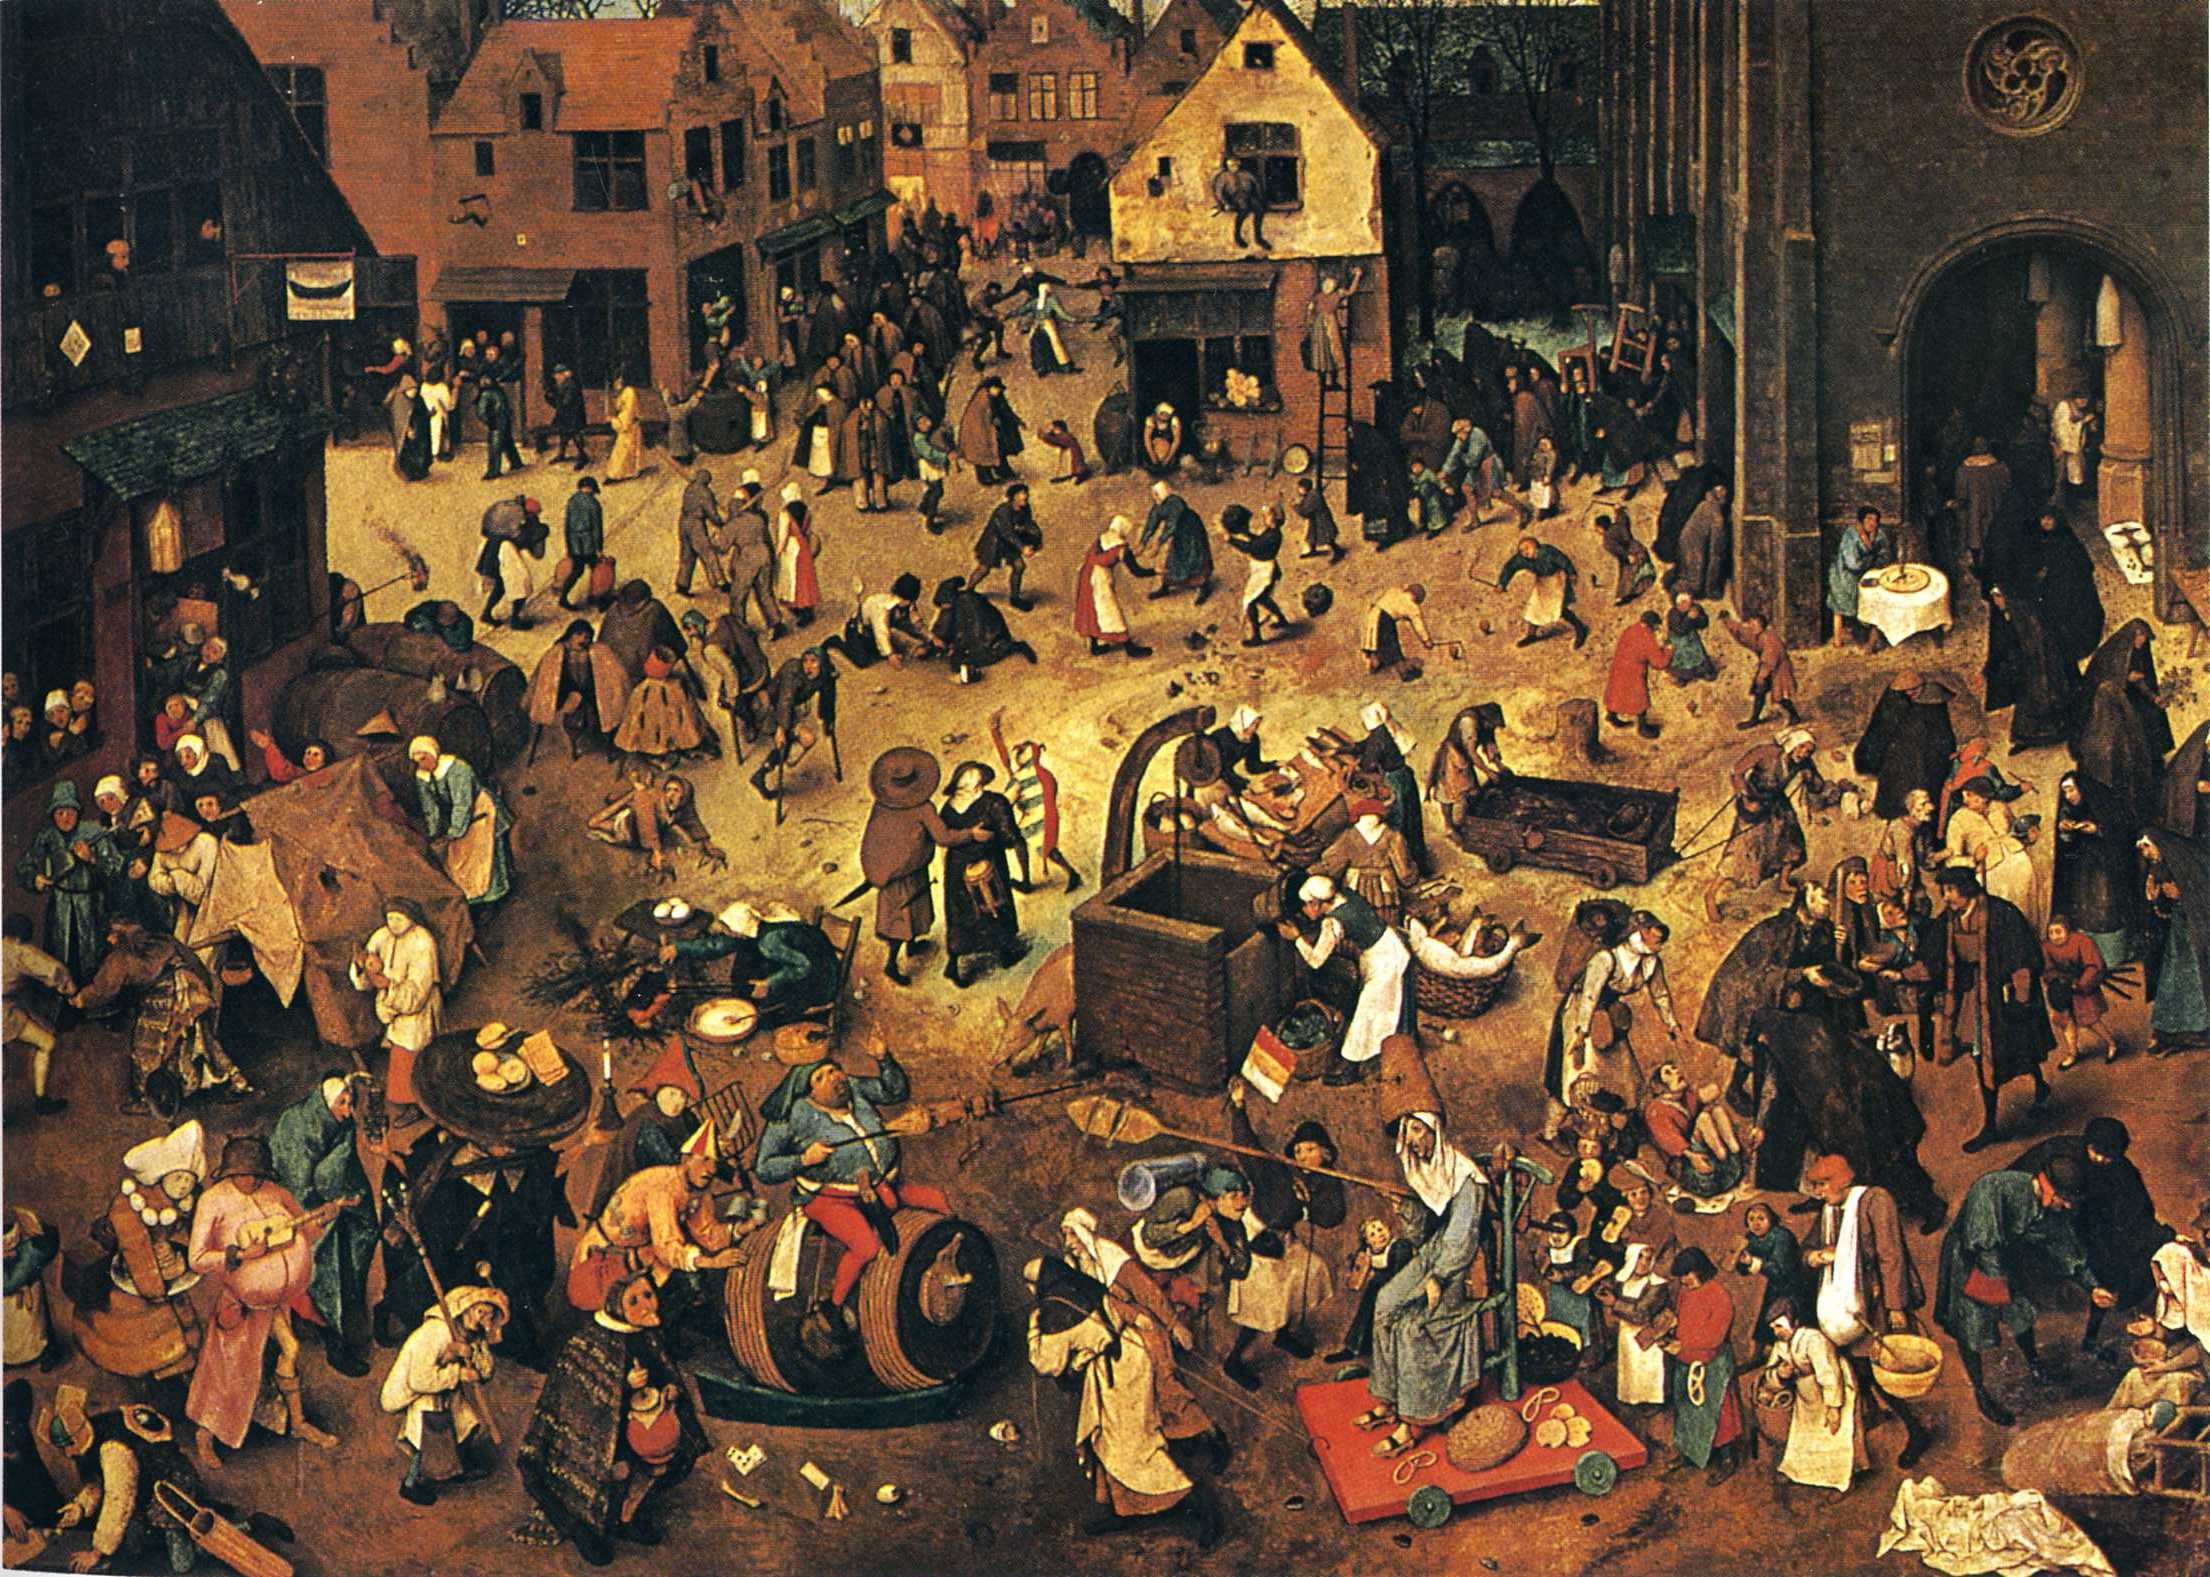 La Lotta tra Carnevale e Quaresima by Pieter Bruegel il Vecchio - 1559 - 118 x 164,5 cm Kunsthistorisches Museum